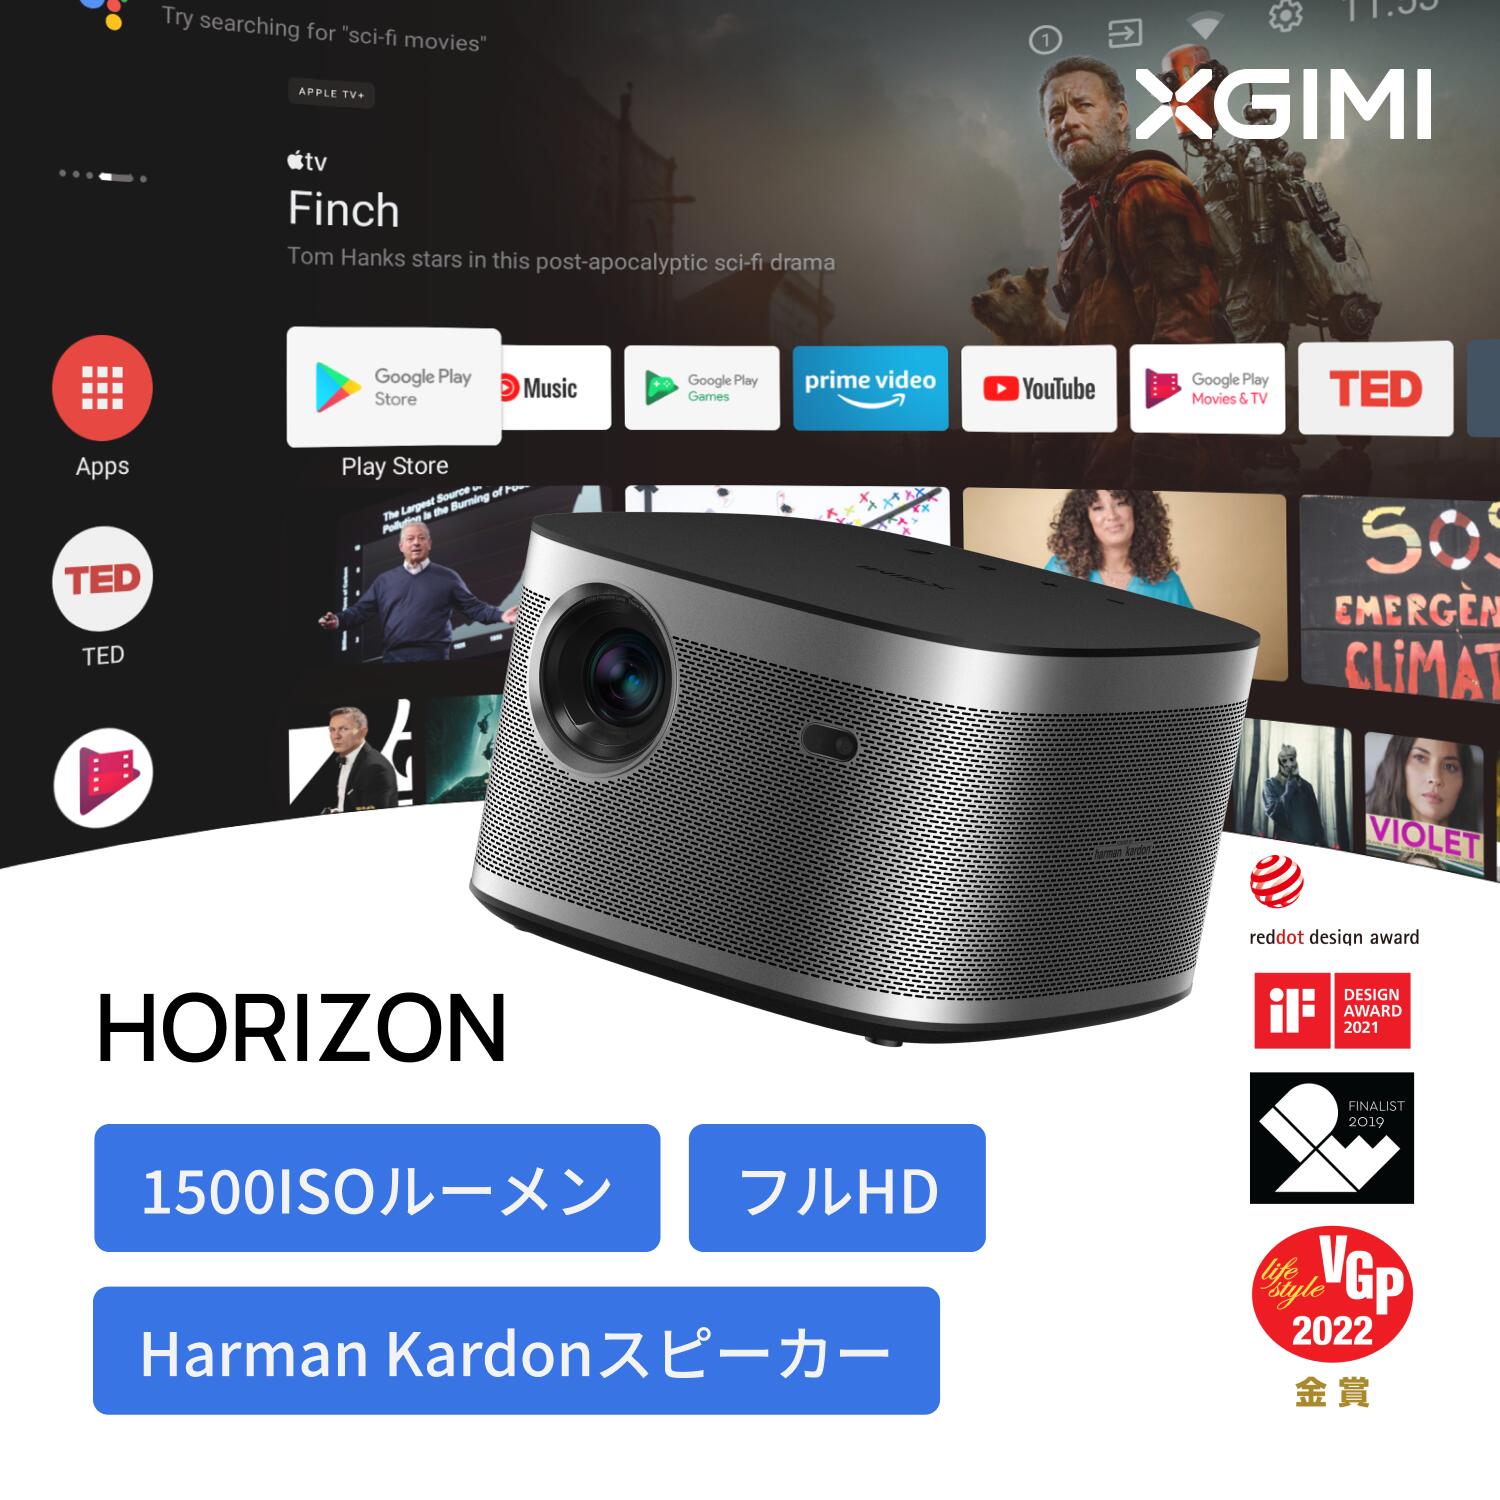 XGIMI HORIZON 高輝度 ホームプロジェクター フルHD 1080p 家庭用 Android TV 10.0搭載 ネイティブ解像度 【Harman Kardonスピーカー / 200インチ投影 / bluetooth対応 / 自動台形補正】